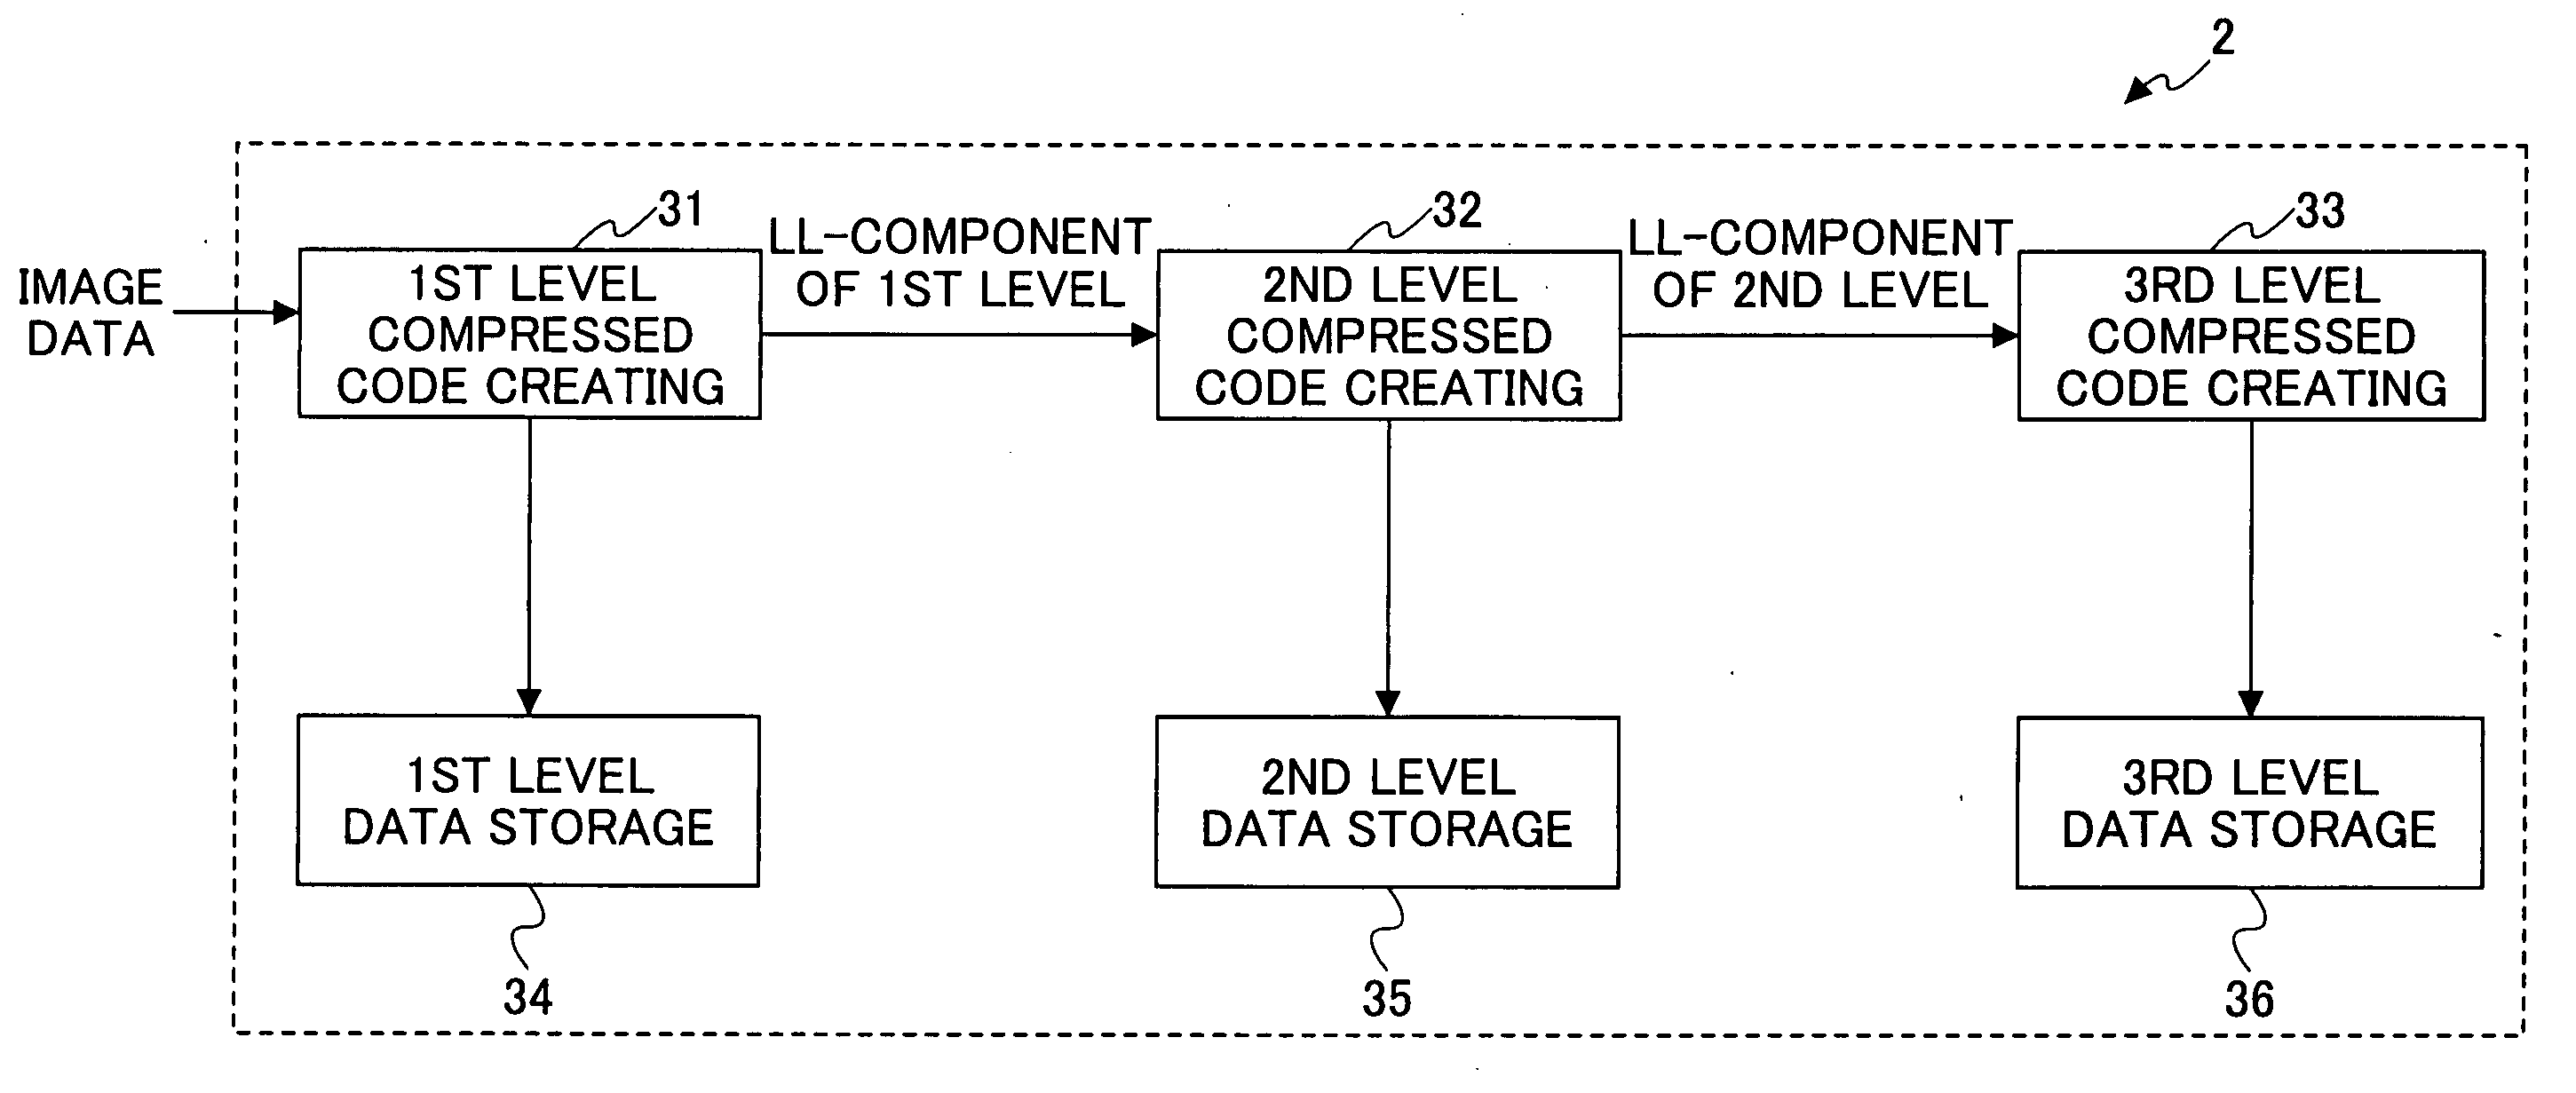 Image processing apparatus and computer-readable storage medium